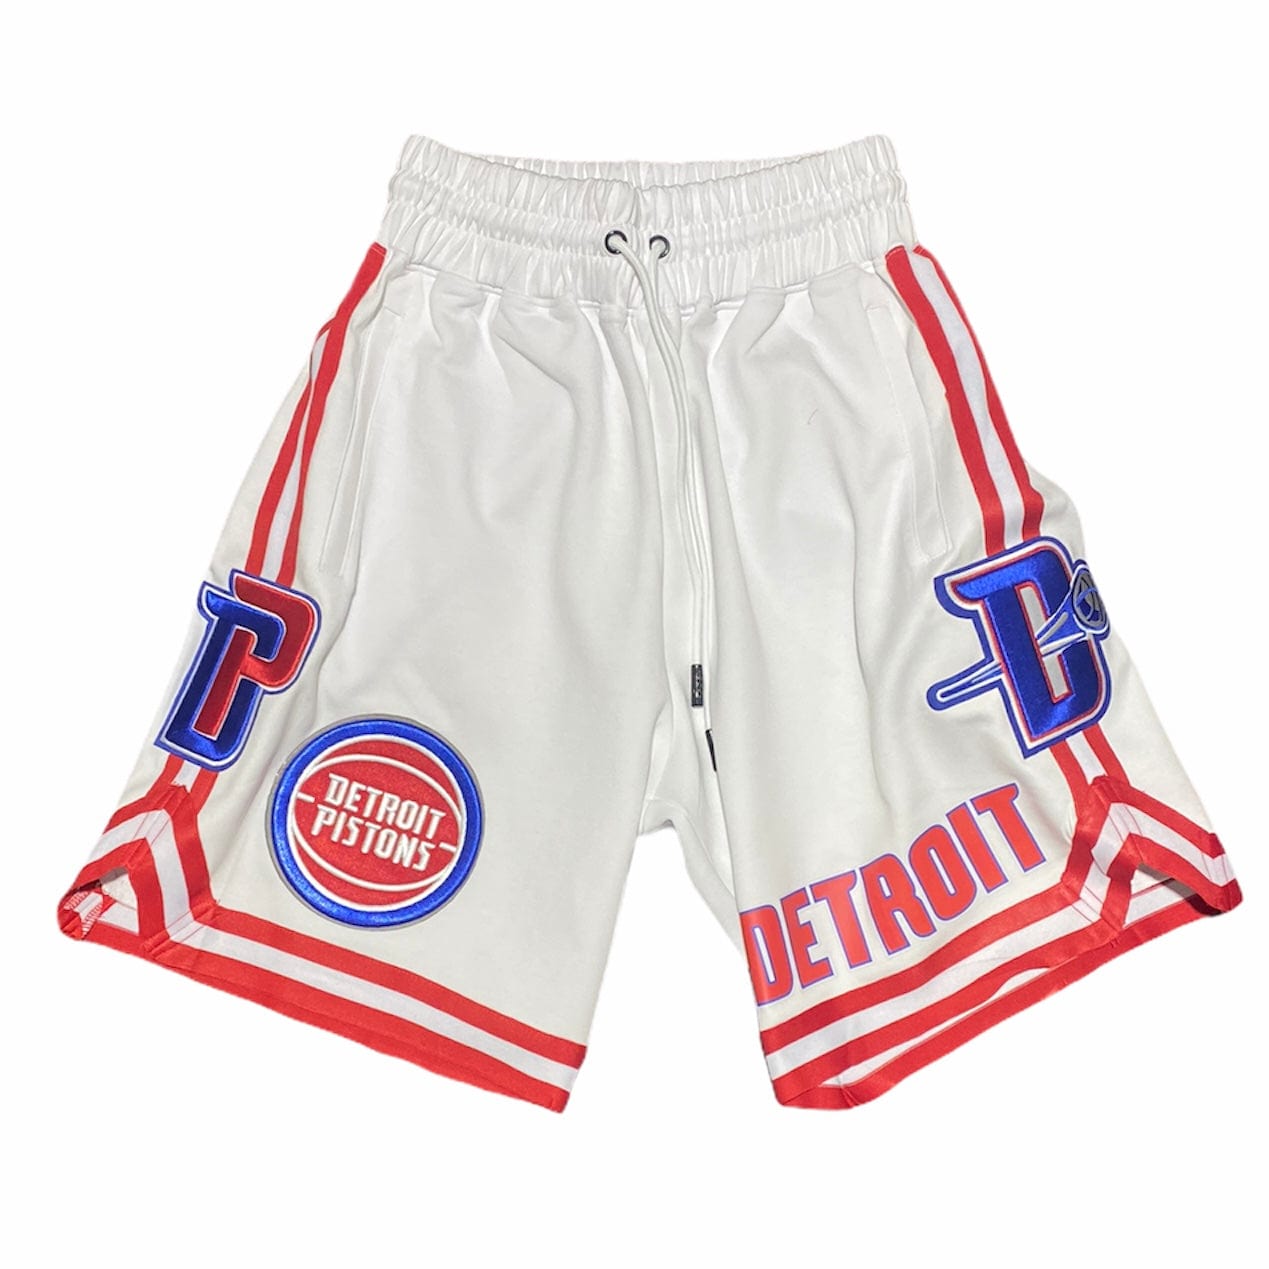 Shop Pro Standard Detroit Pistons Retro Classic Shorts BDP356061-ERB white